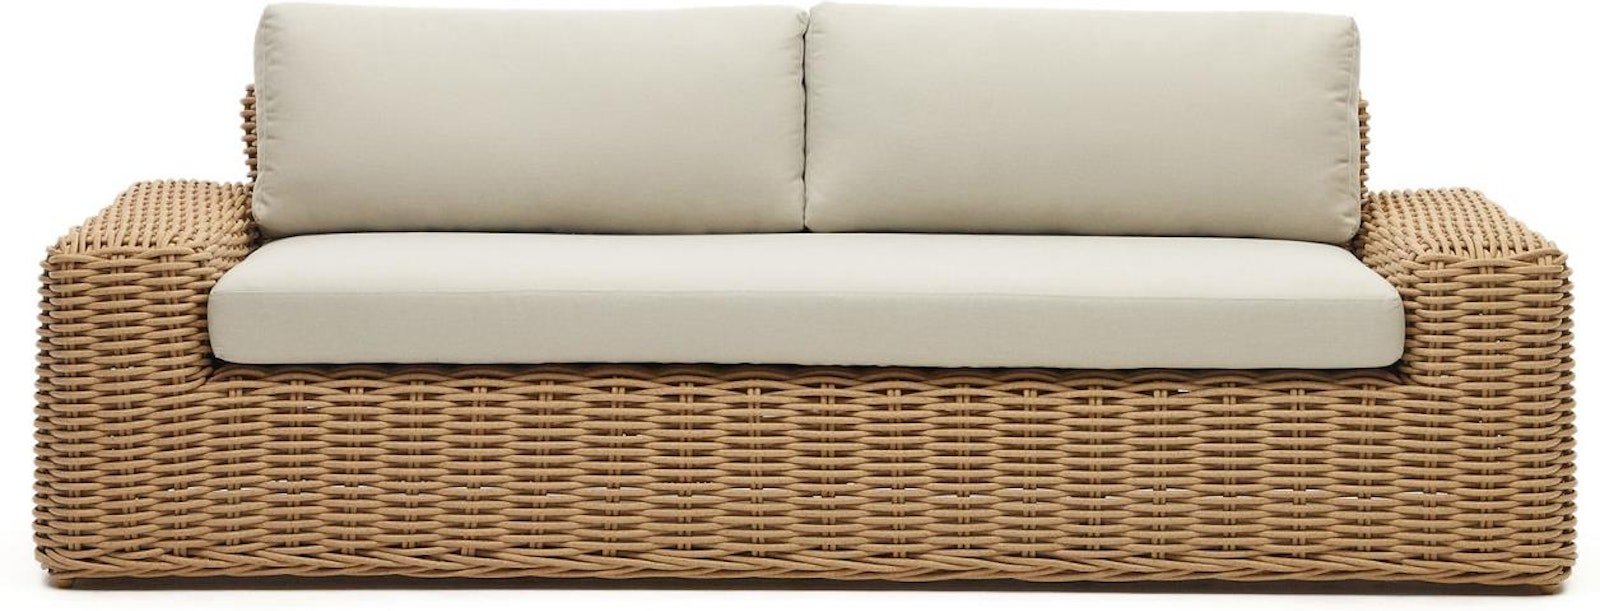 Portlligat, Udendørs 3-personers sofa, rustik by Laforma (H: 68 cm. x B: 222 cm. x L: 95 cm., Beige/Hvid)